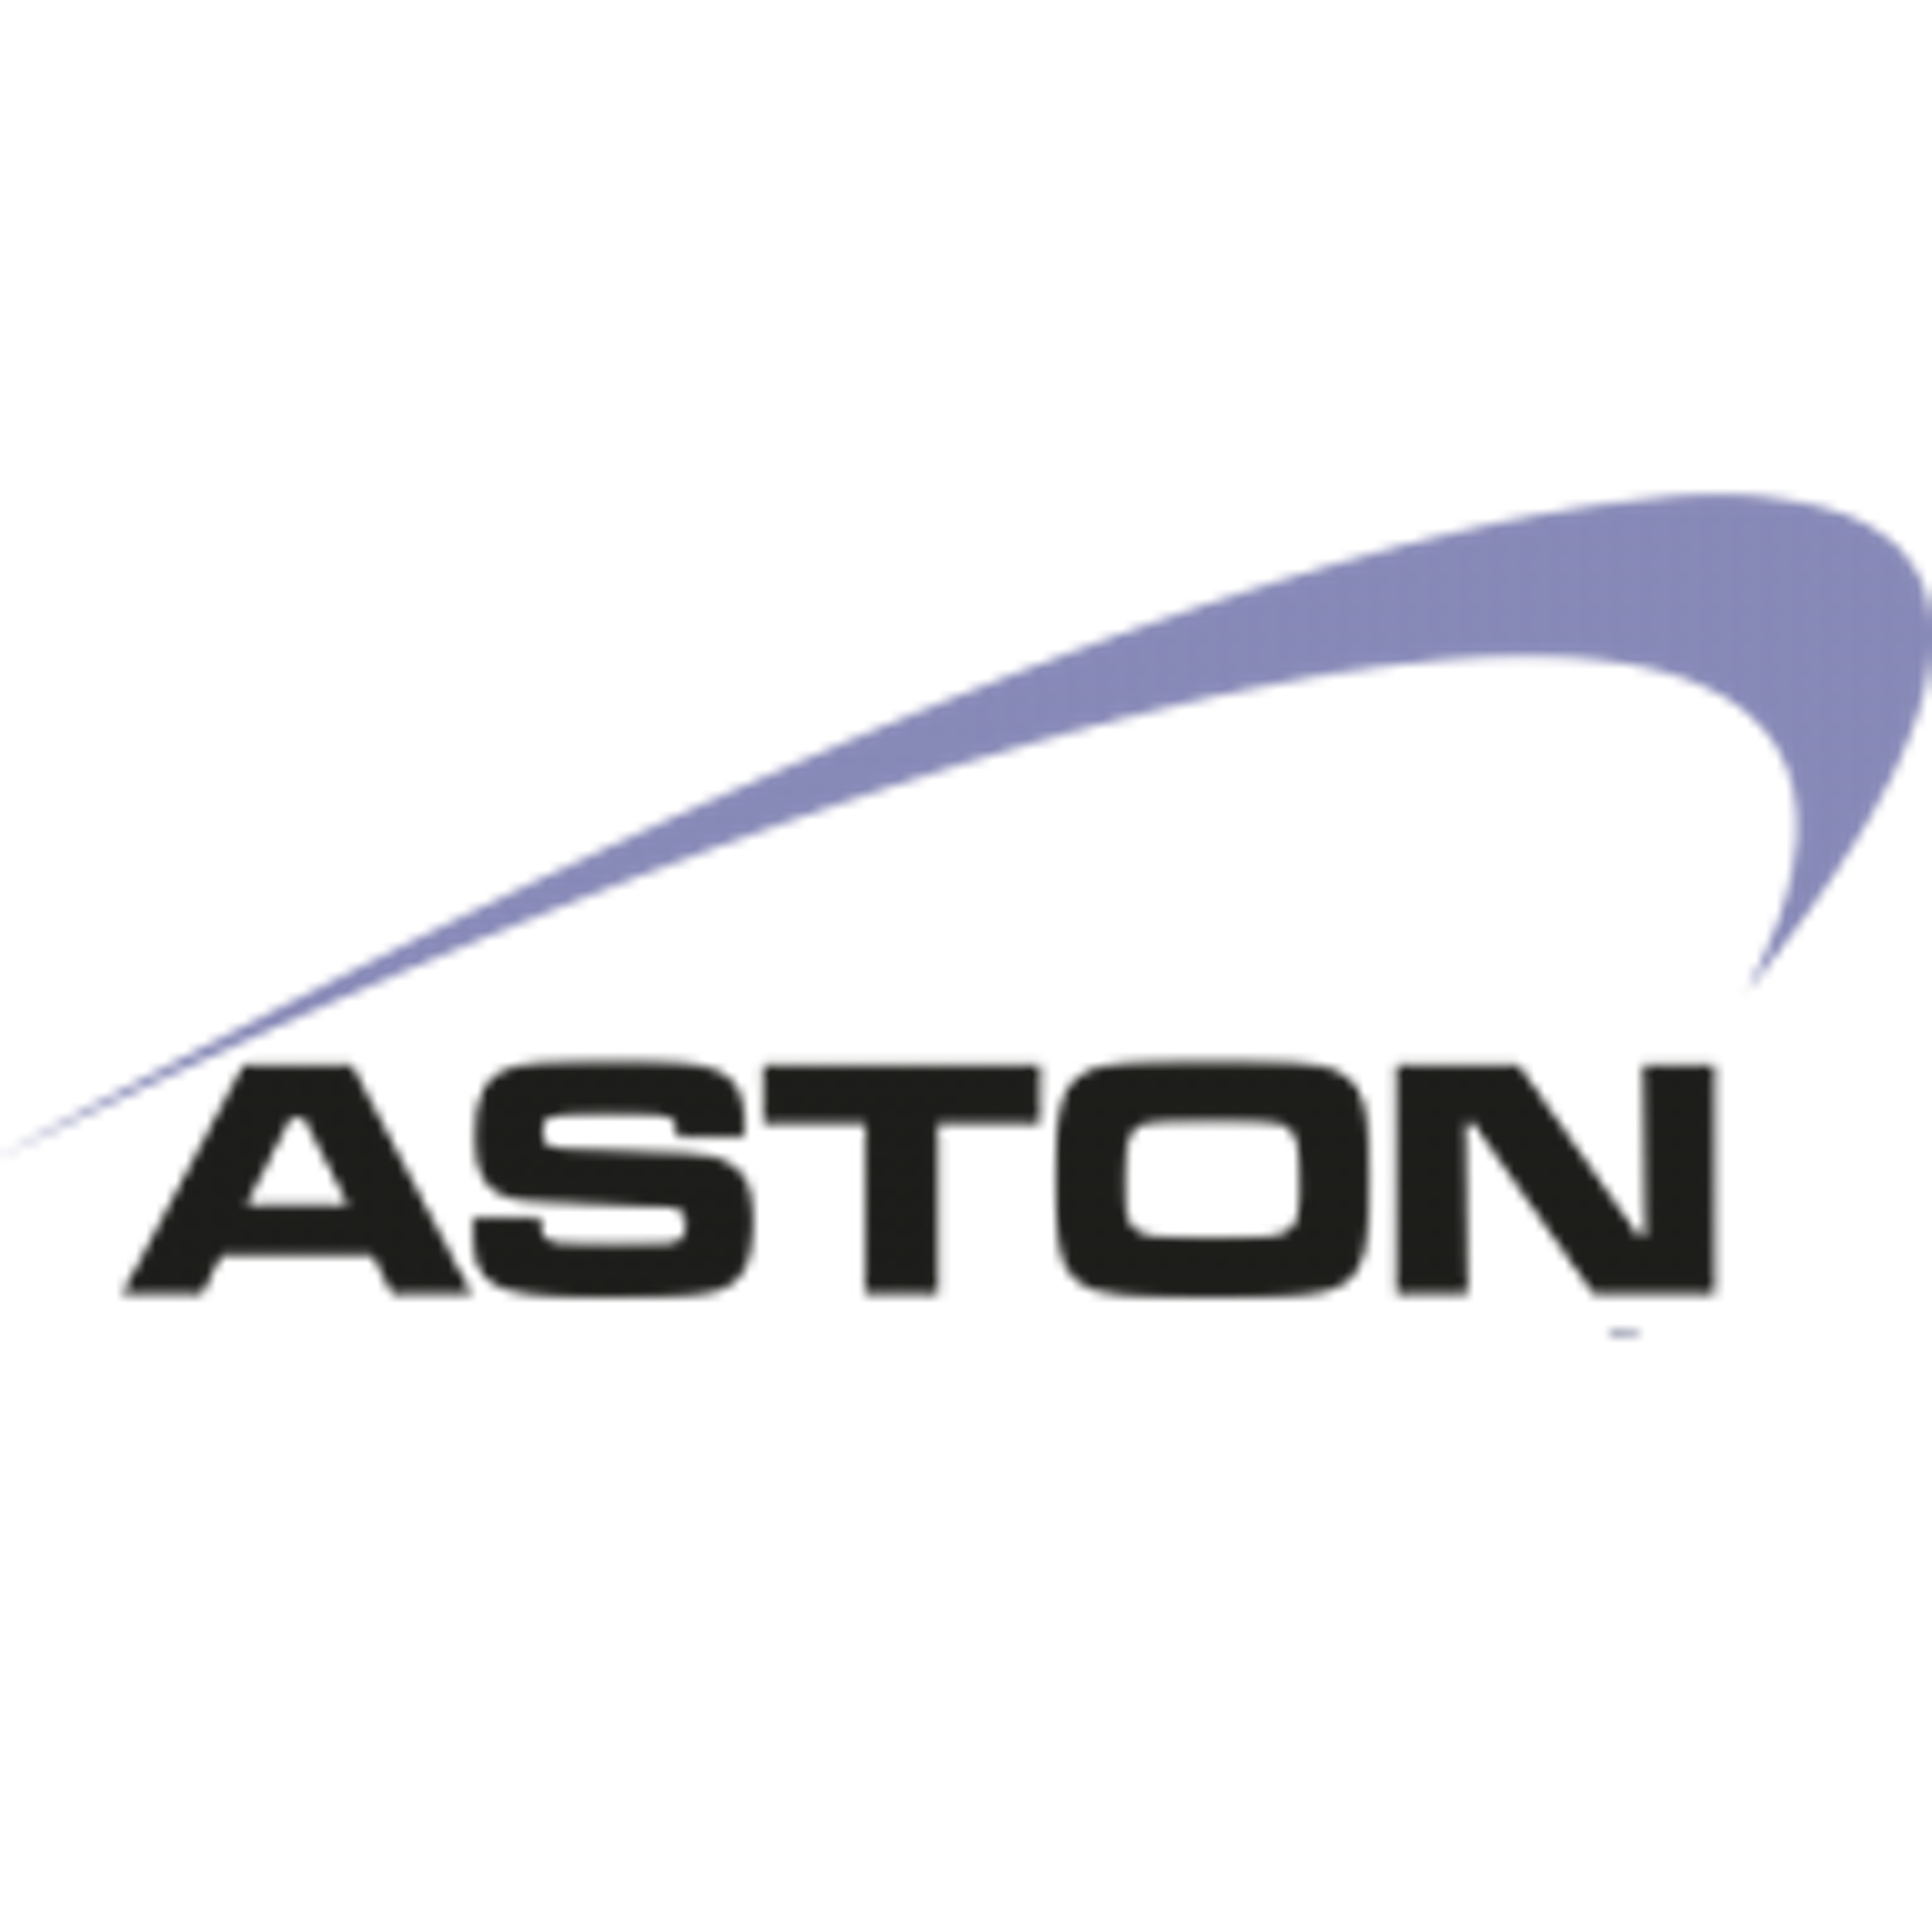 Astoninfosec.co.uk